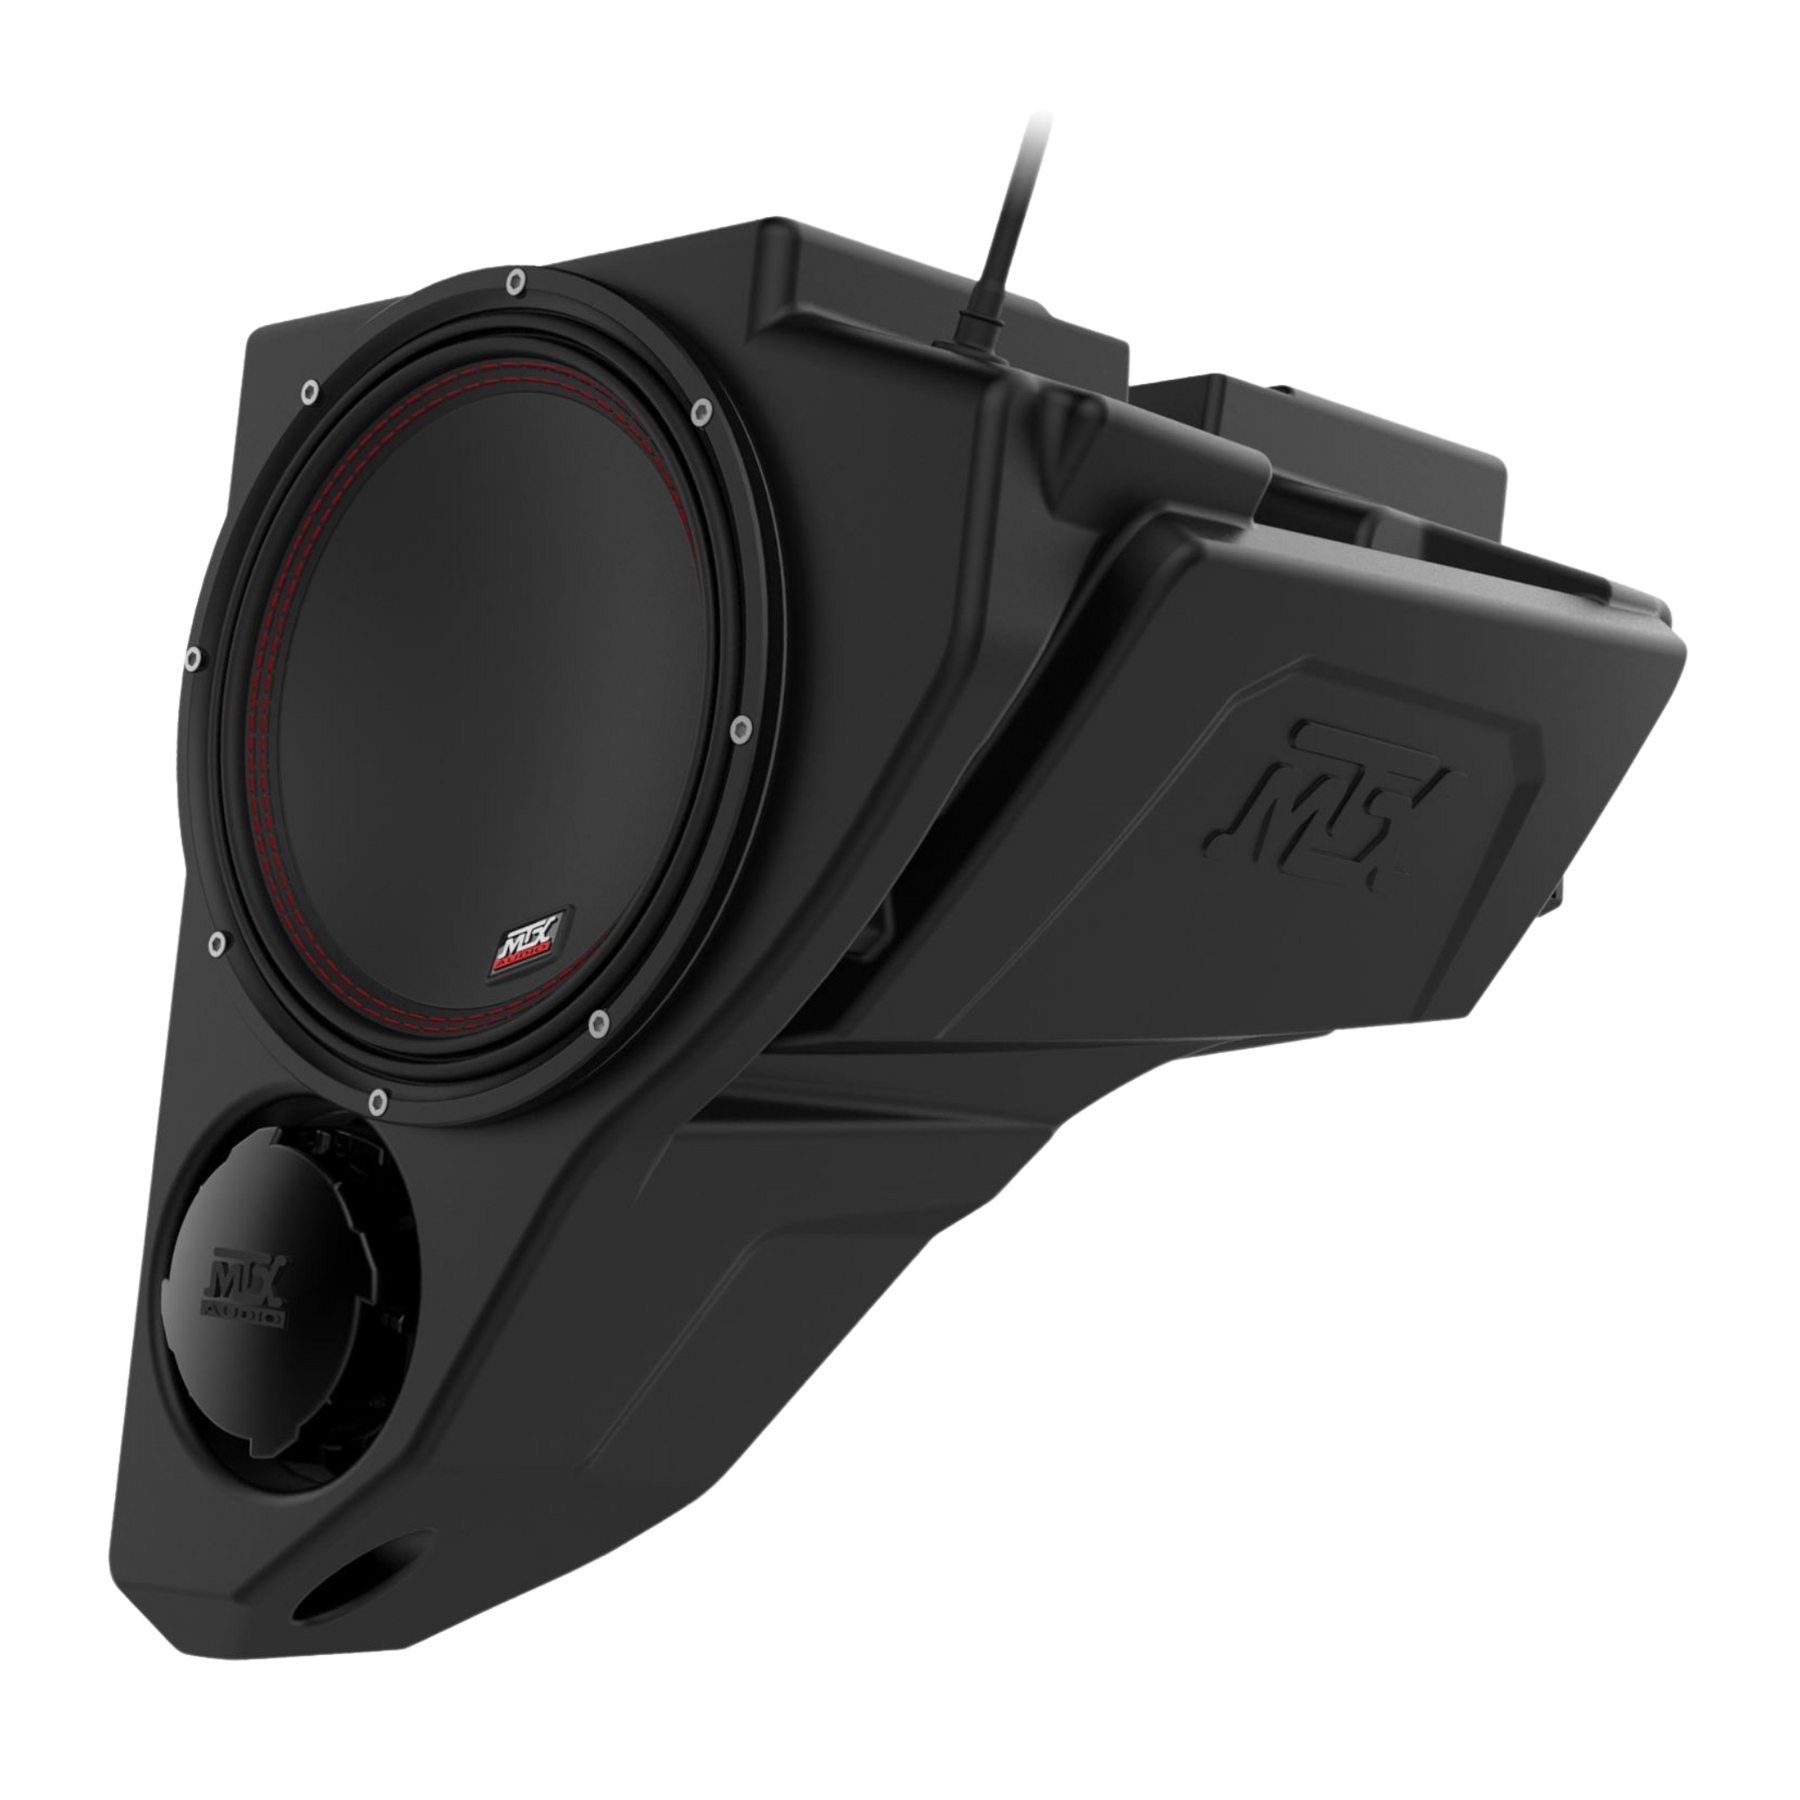 Polaris RZR with RideCommand 3-Speaker Audio System (2014+)